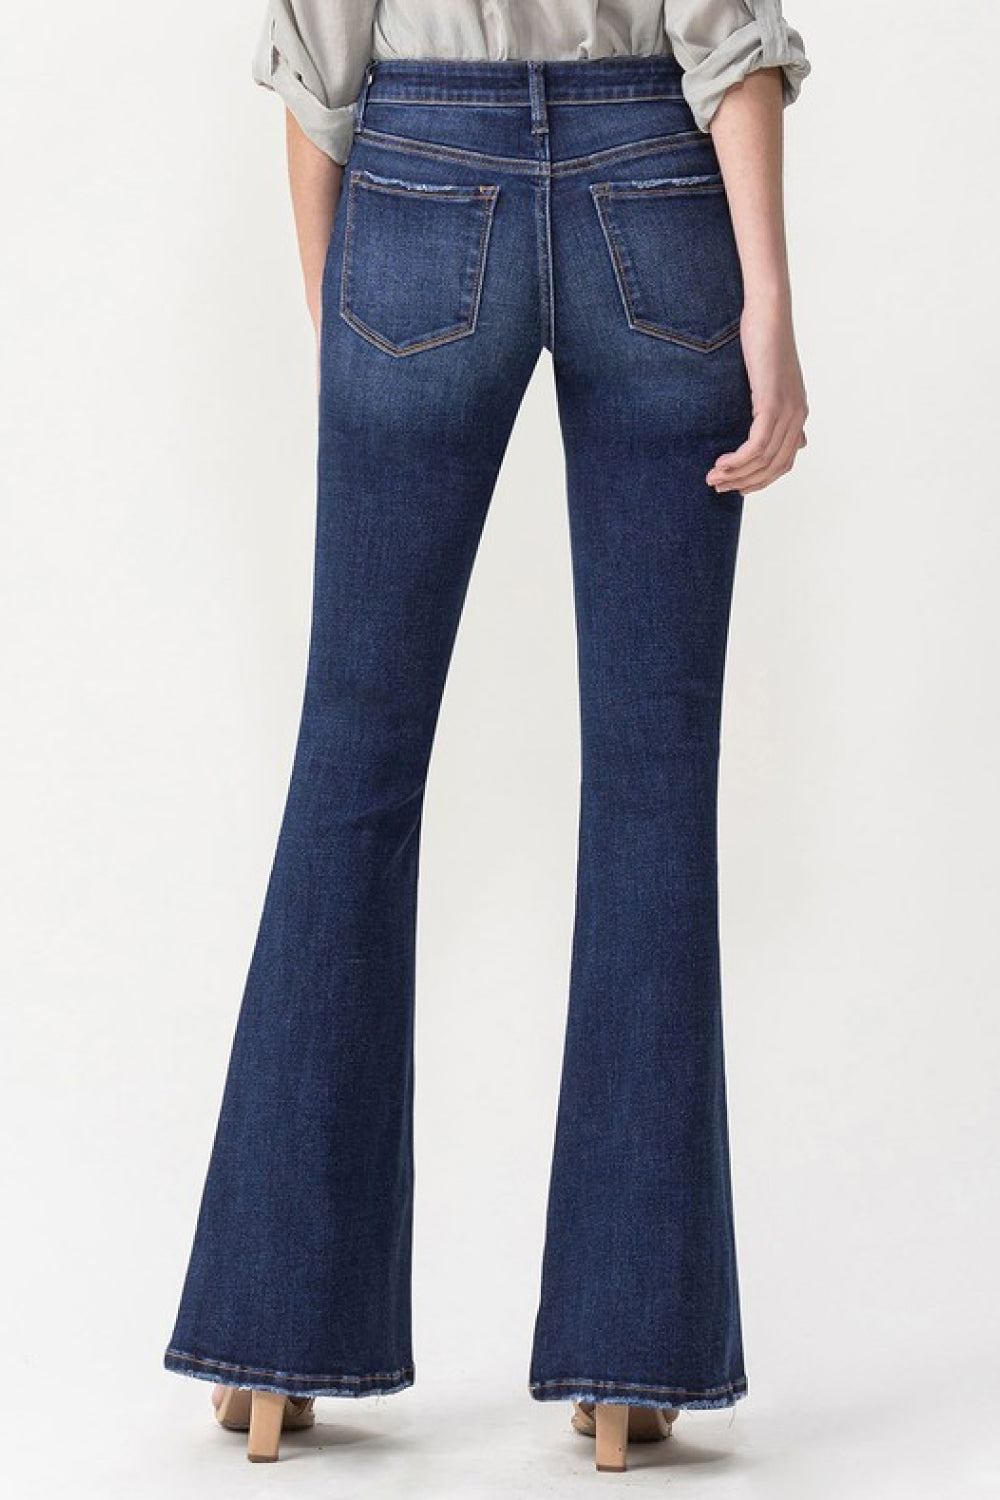 Figure Flattering Flare Jeans